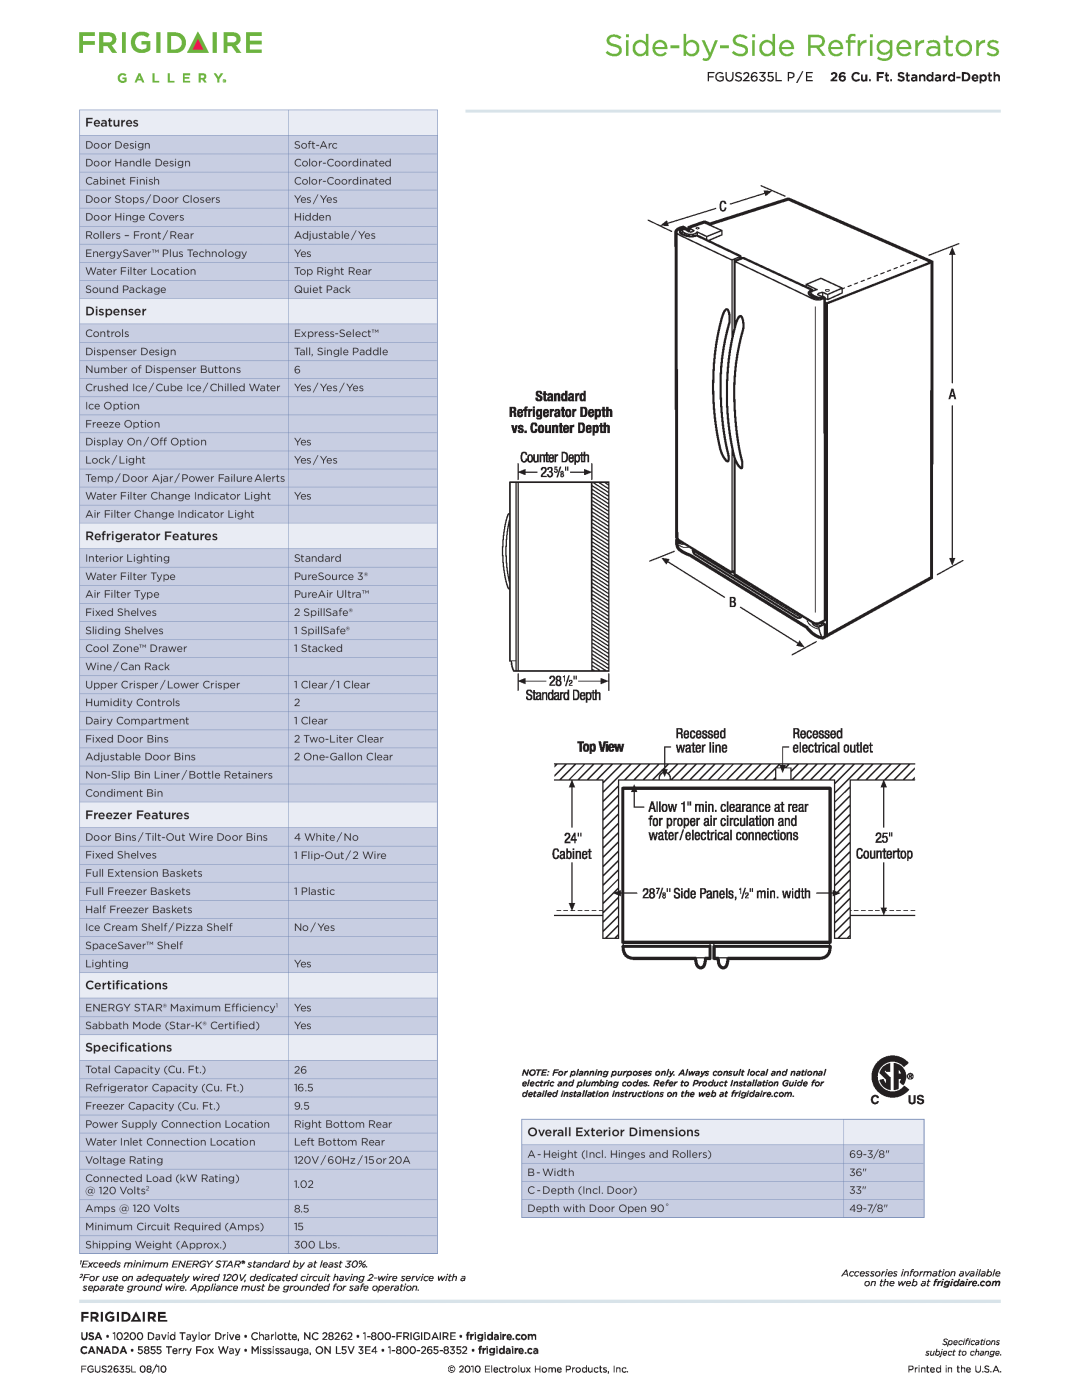 Frigidaire FGUS2635L P/E dimensions Side-by-SideRefrigerators, FGUS2635L P / E 26 Cu. Ft. Standard-Depth 